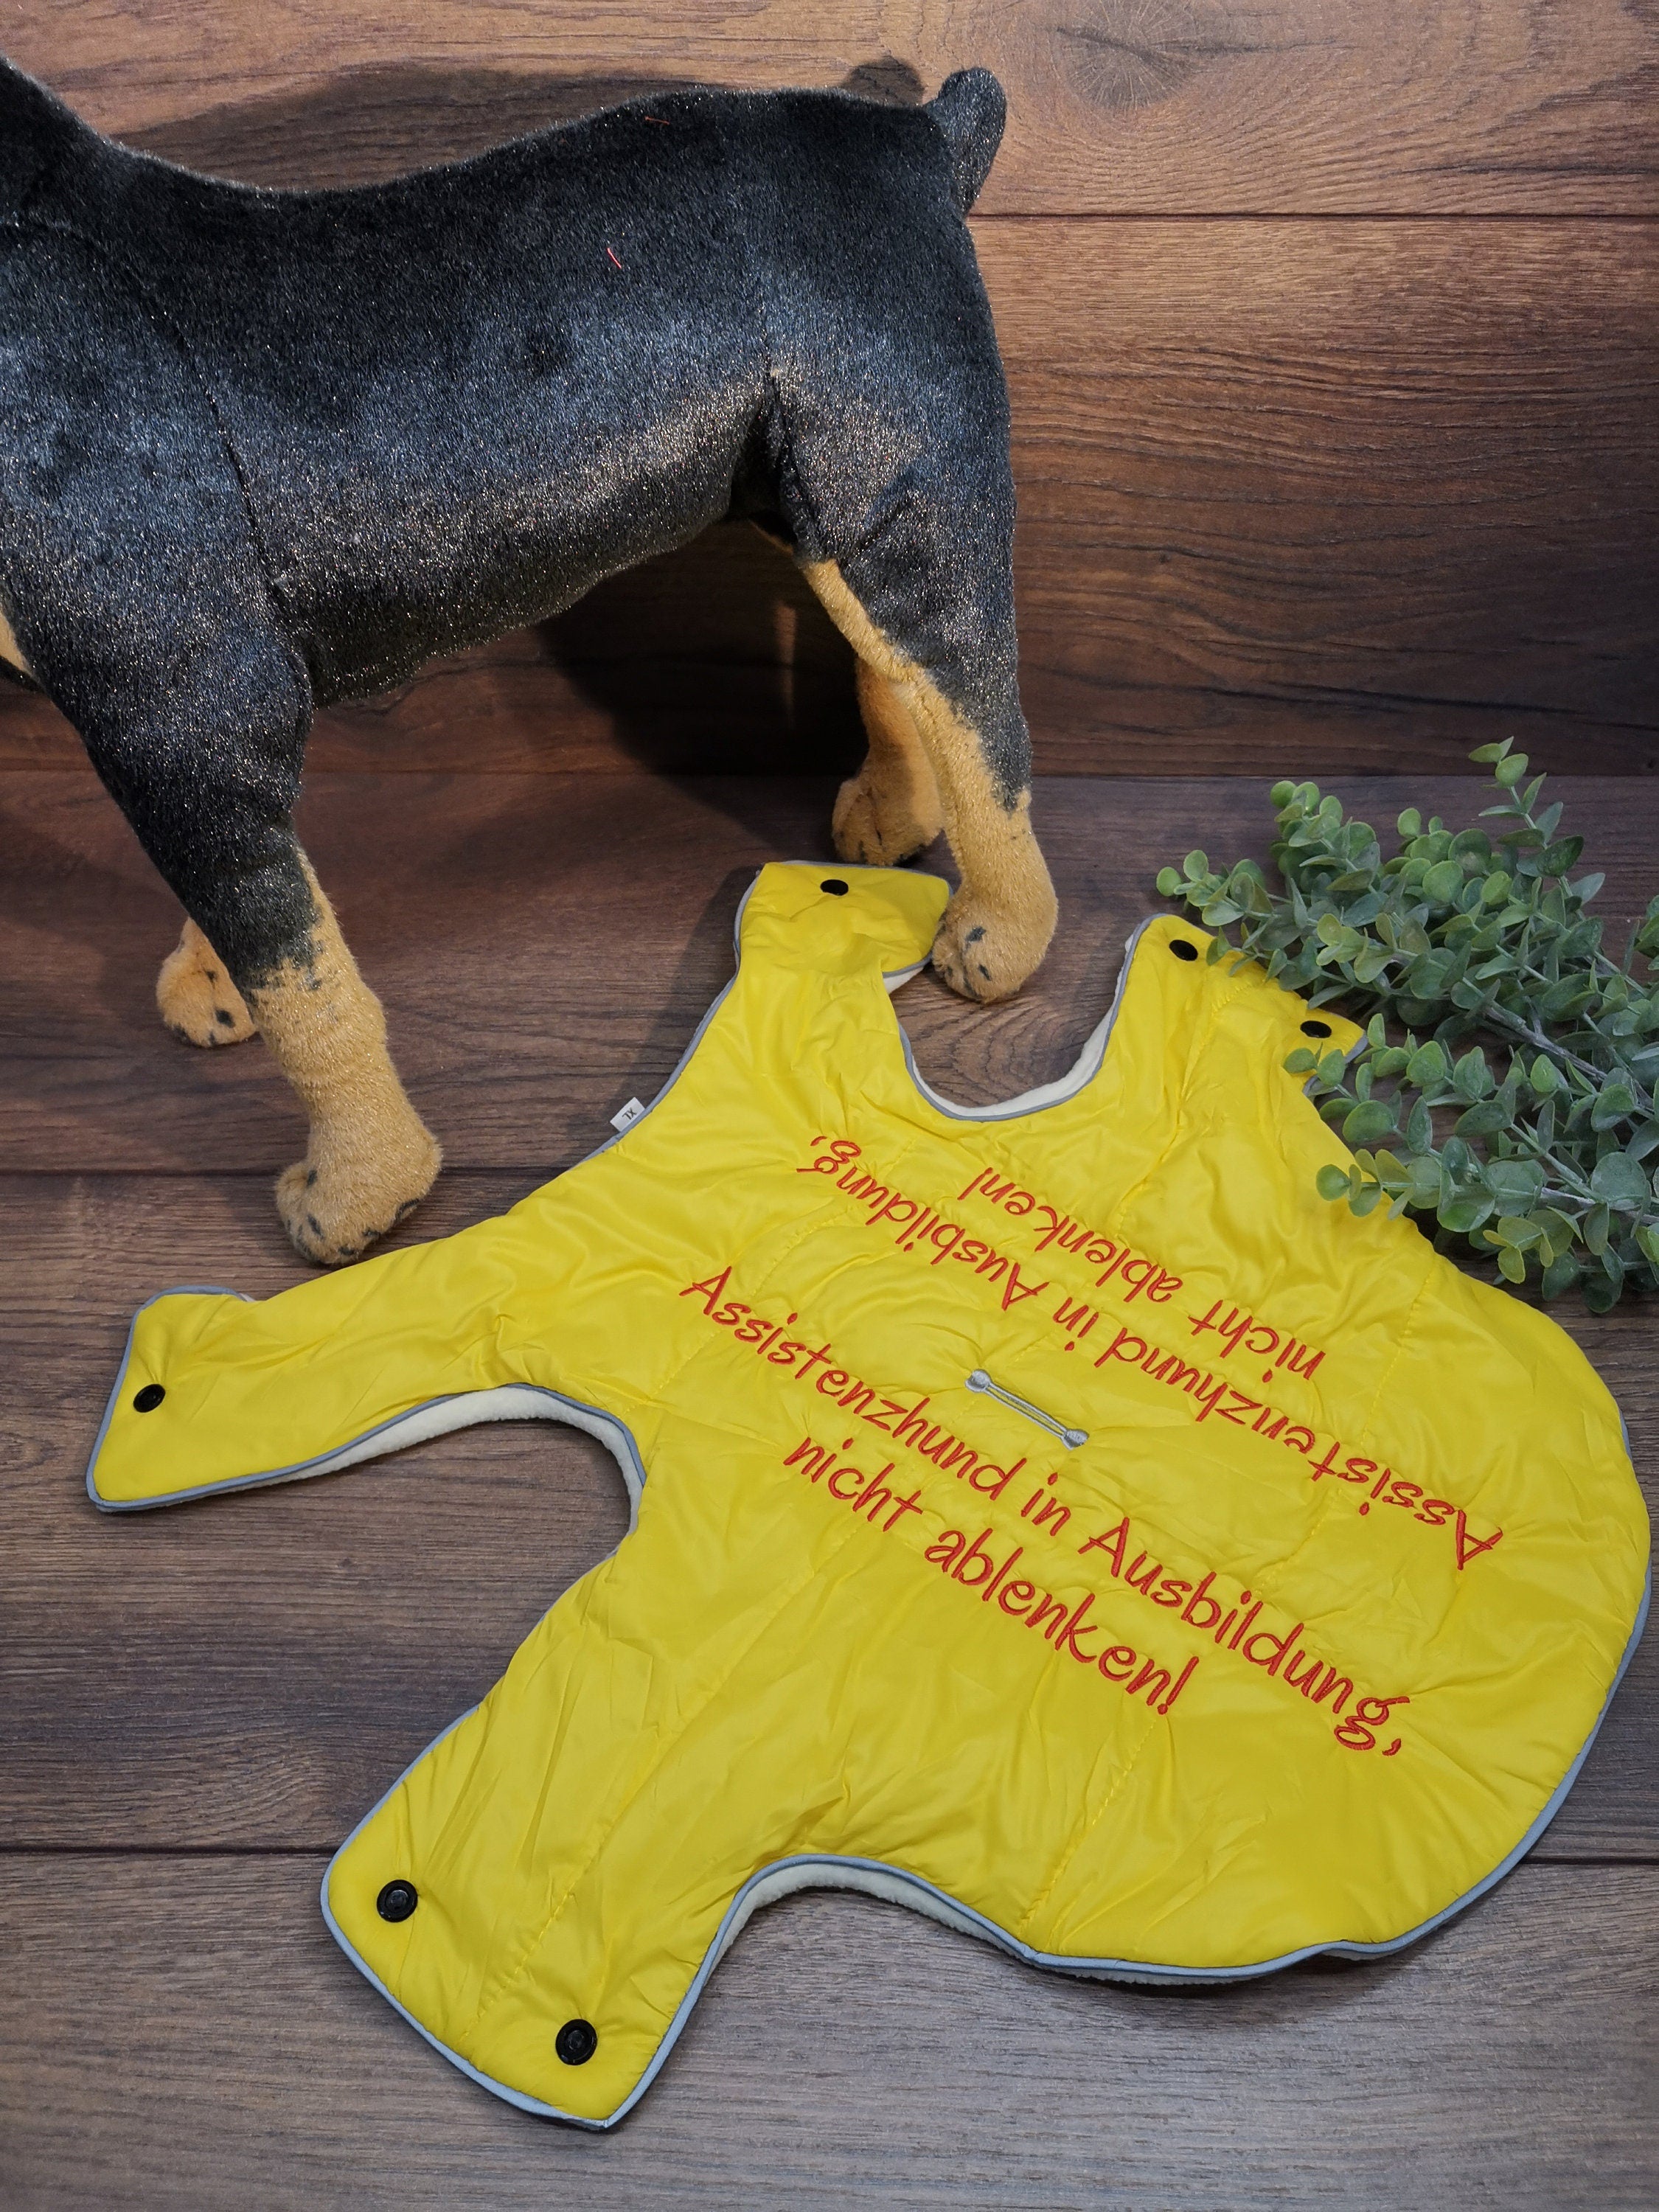 Hundemantel mit Fleece in gelb, Hundemantel mit Namen, Hundemantel wasserabweisend, Hundemantel für kleine Hunde, Hunde Wintermantel